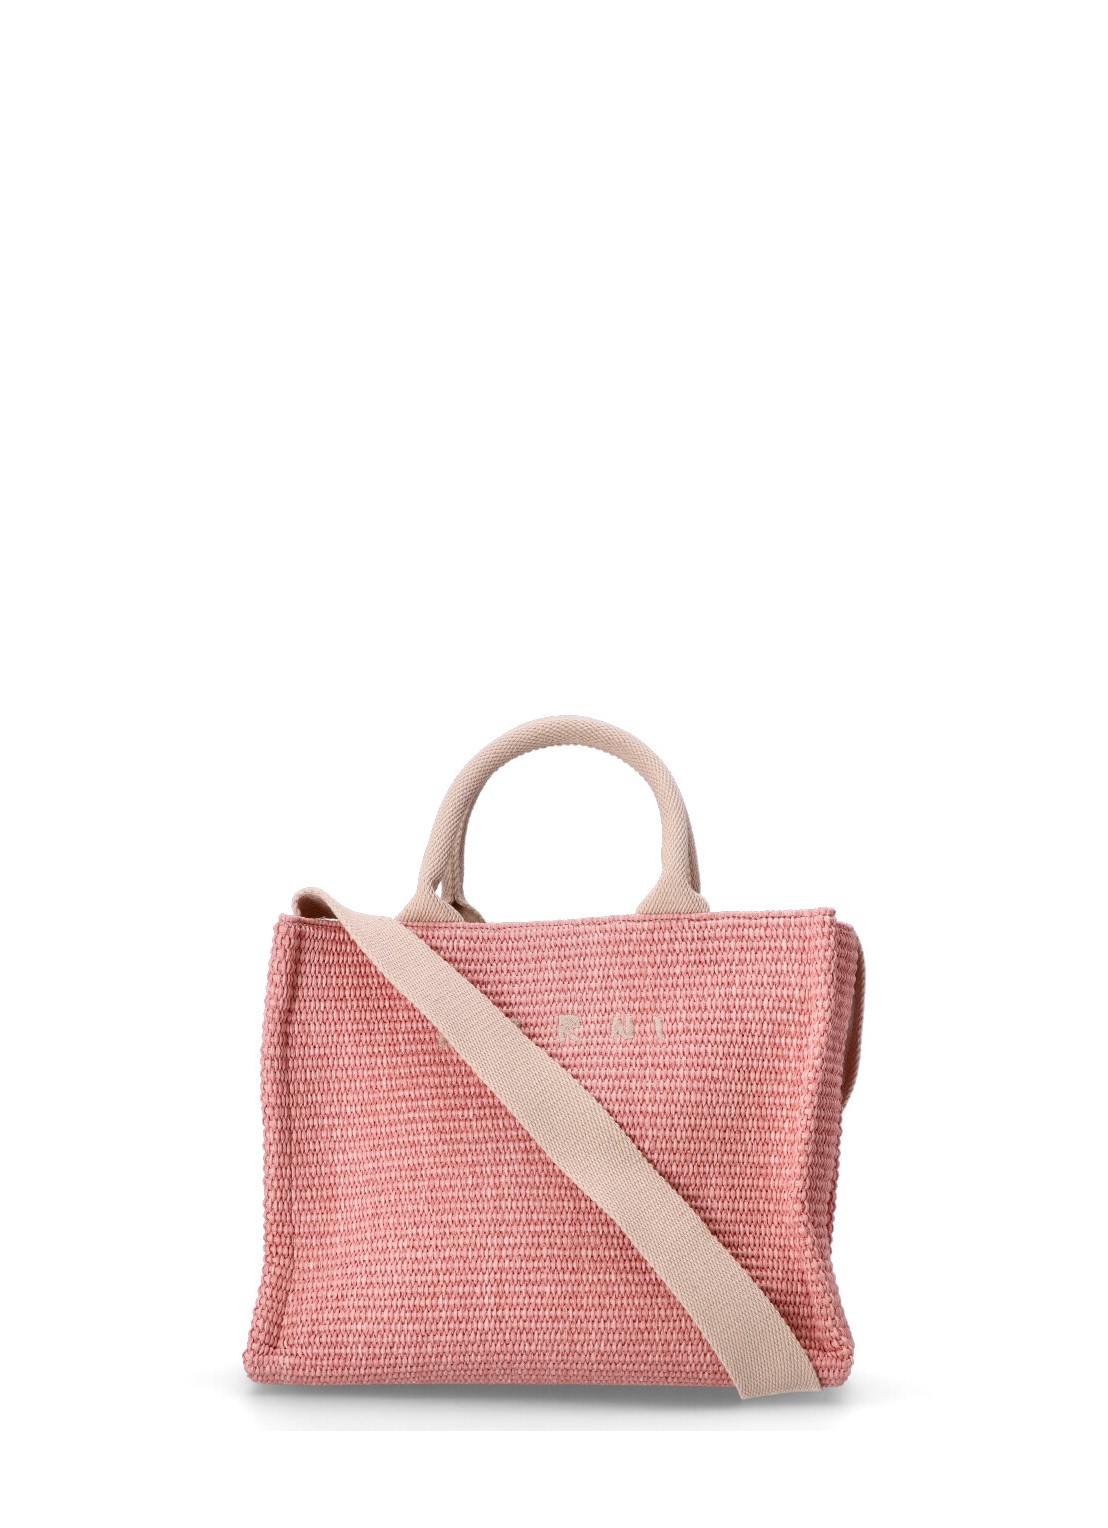 Handbag marni handbag woman small basket shmp0077u0 00c09 talla T/U
 